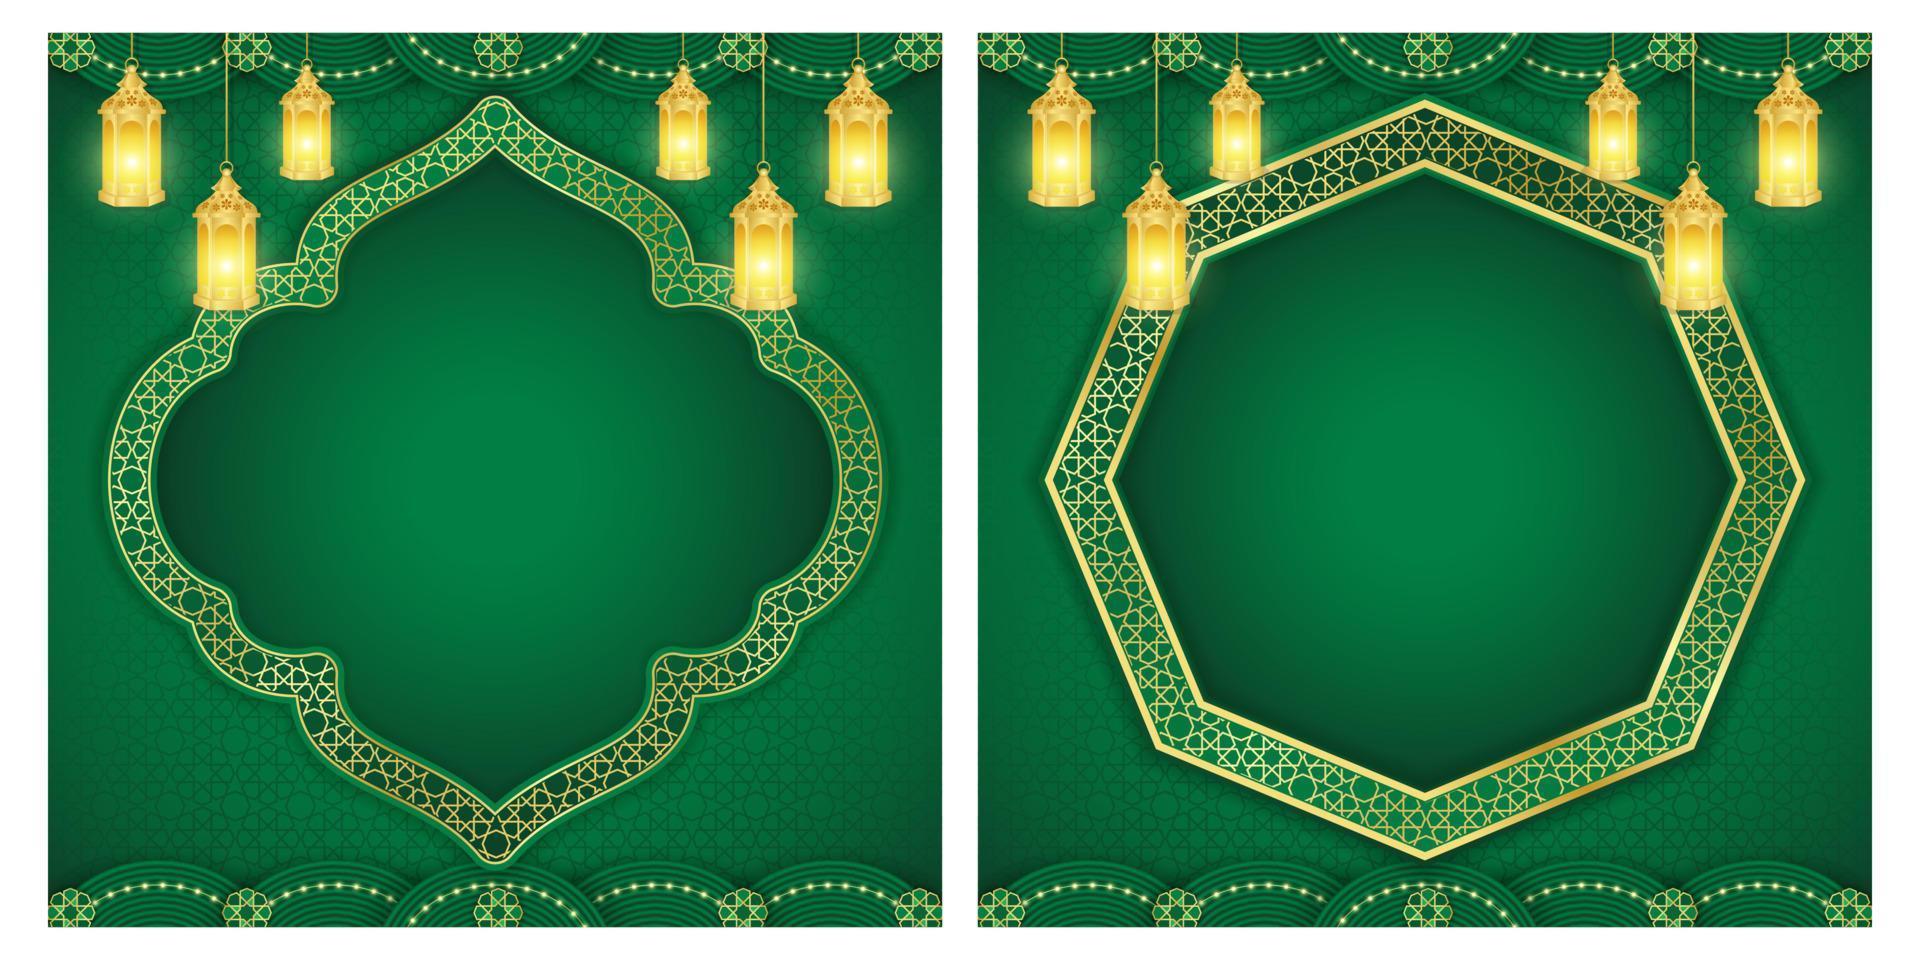 islámico ornamento modelo para fondo, bandera, póster, cubrir diseño, sobre, social medios de comunicación alimentar. Ramadán kareem y eid Mubarak 2023 concepto, verde blanco fondo, musulmán linterna, modelo vector